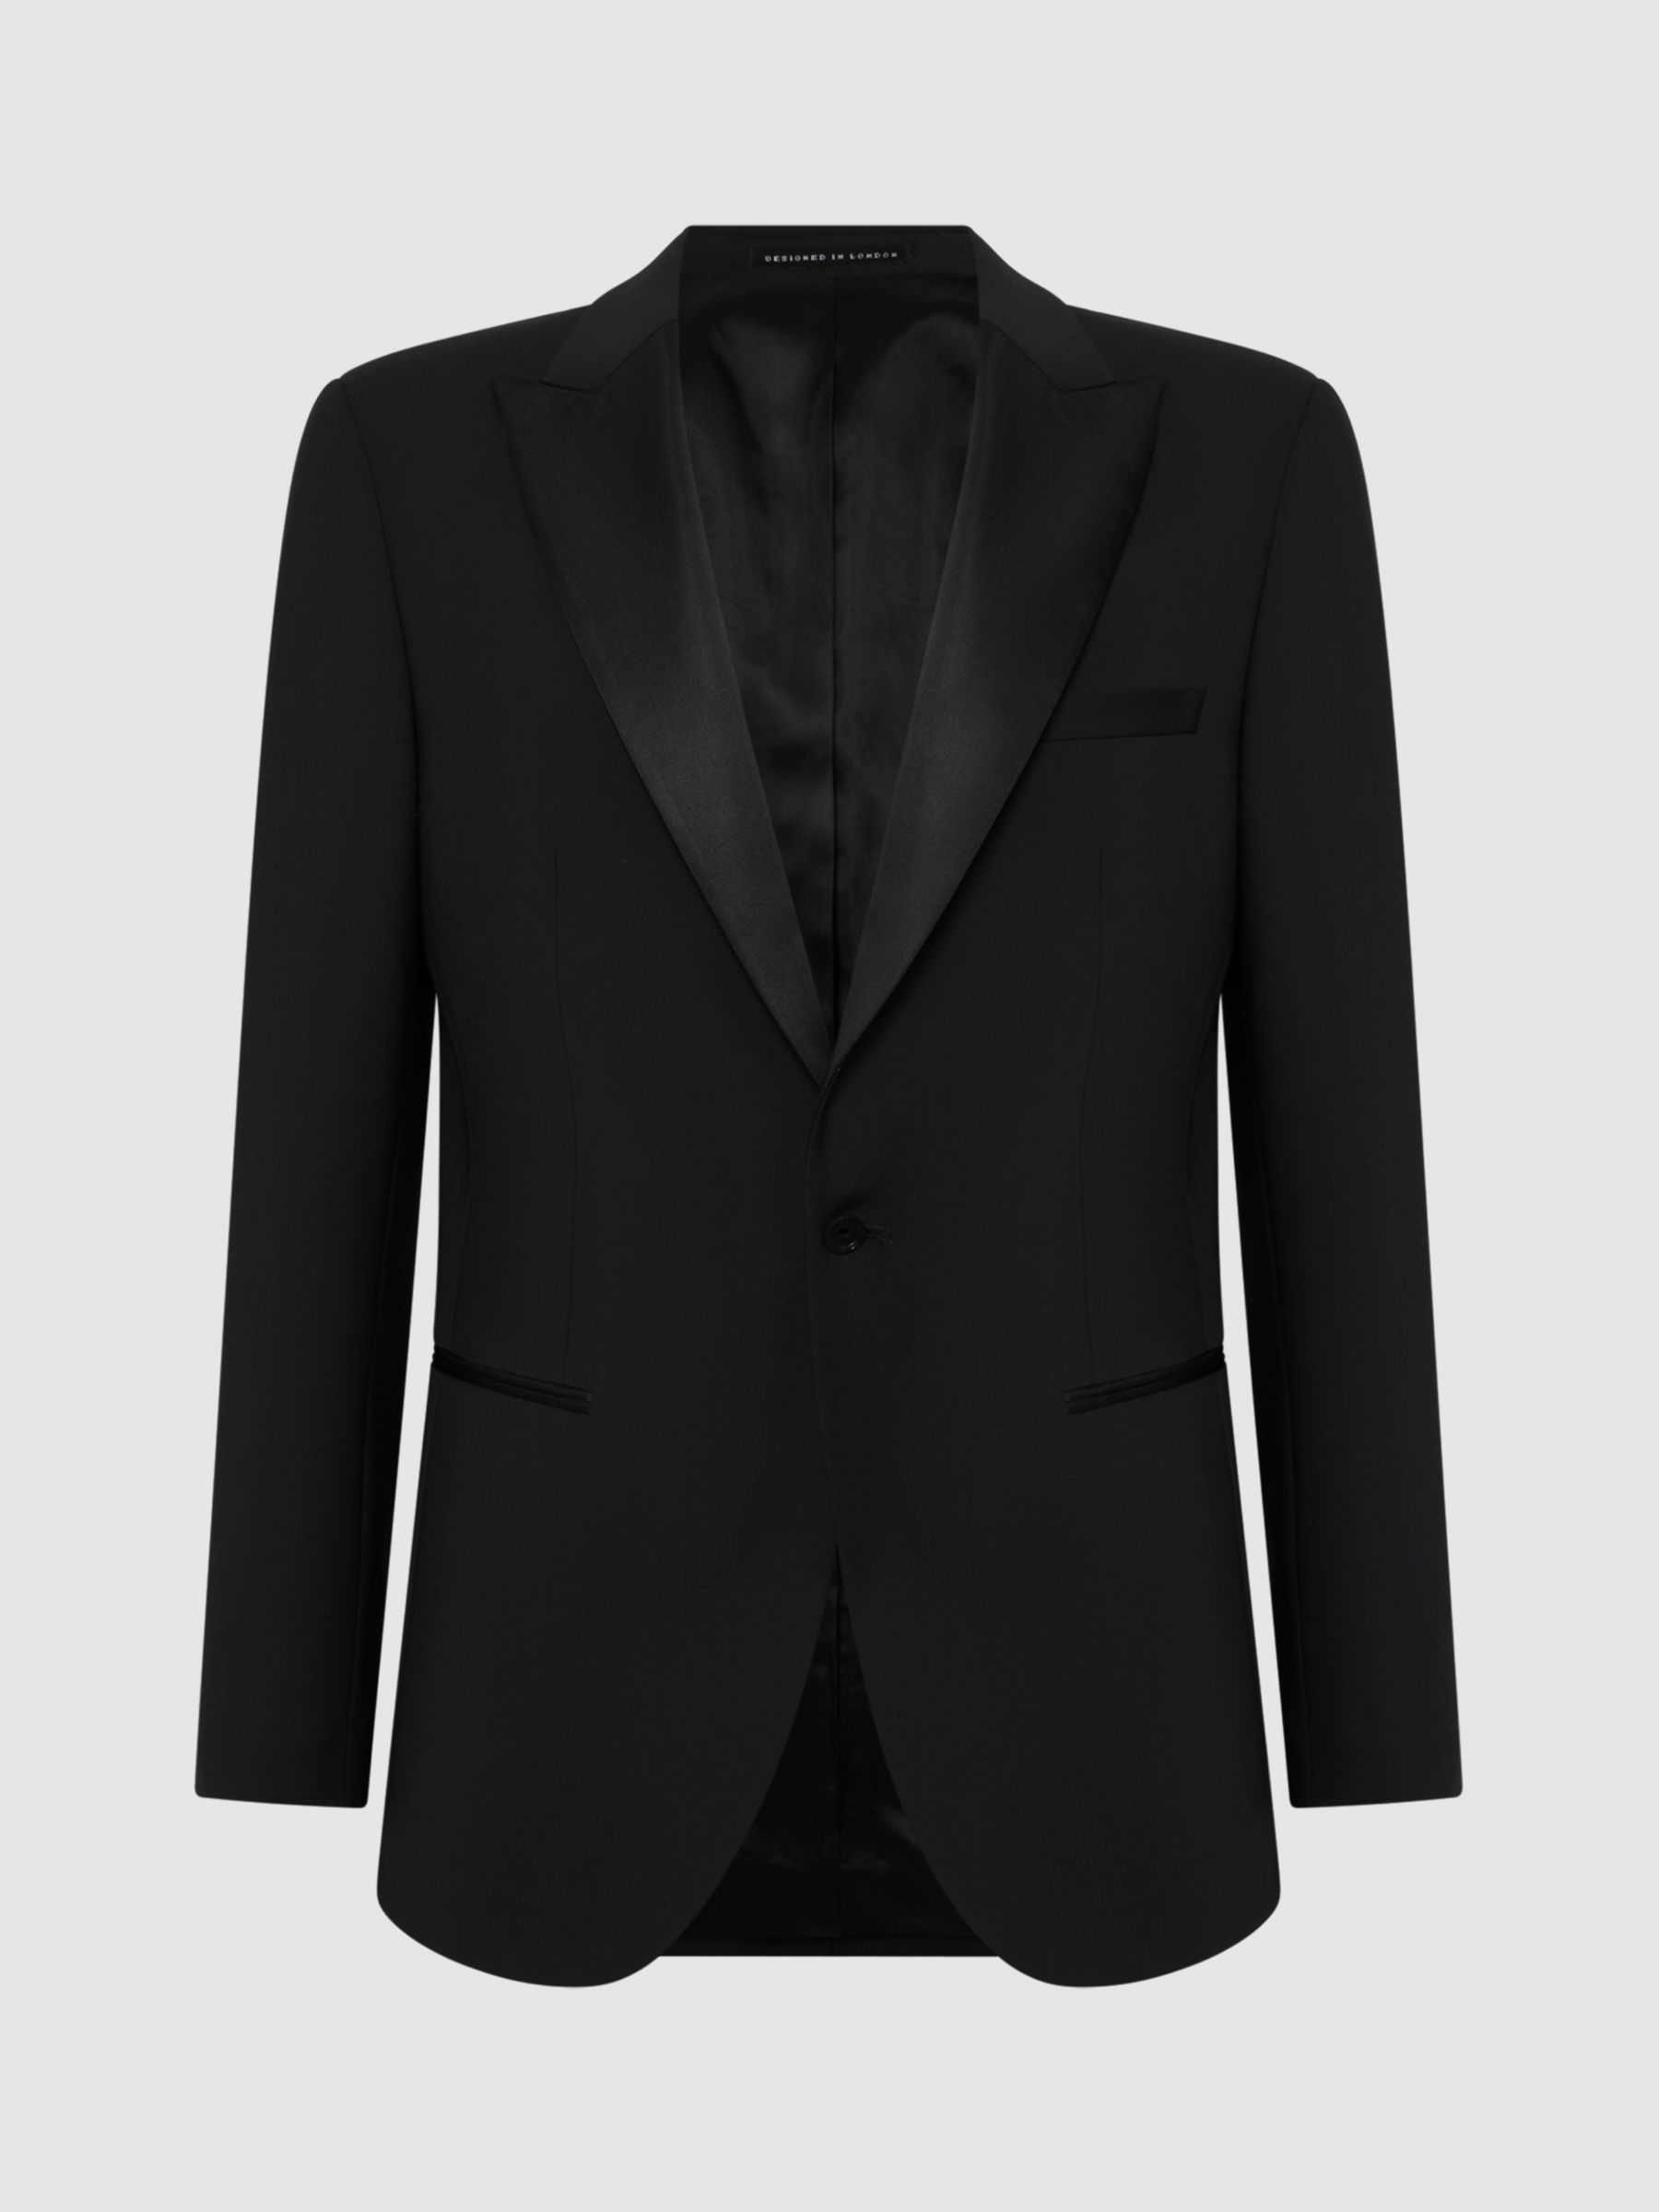 Reiss Poker Suit Jacket, Black, 36